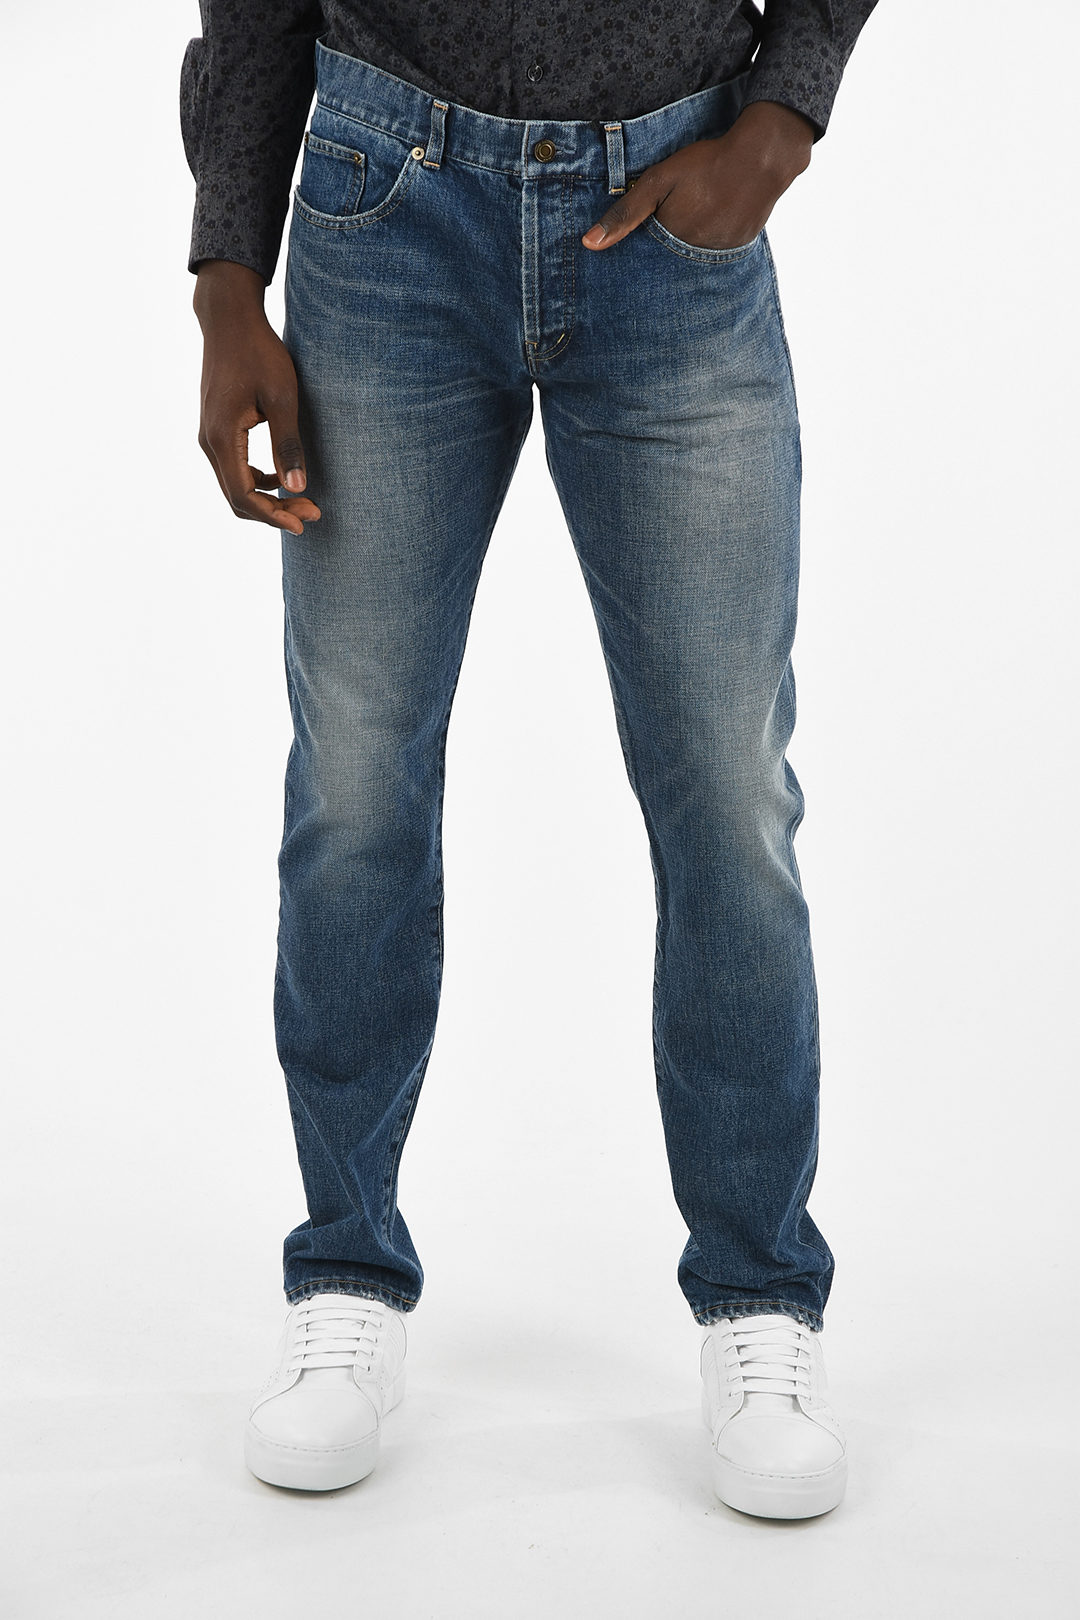 Saint Laurent Stonewashed Slim Fit Jeans 19cm men - Glamood Outlet